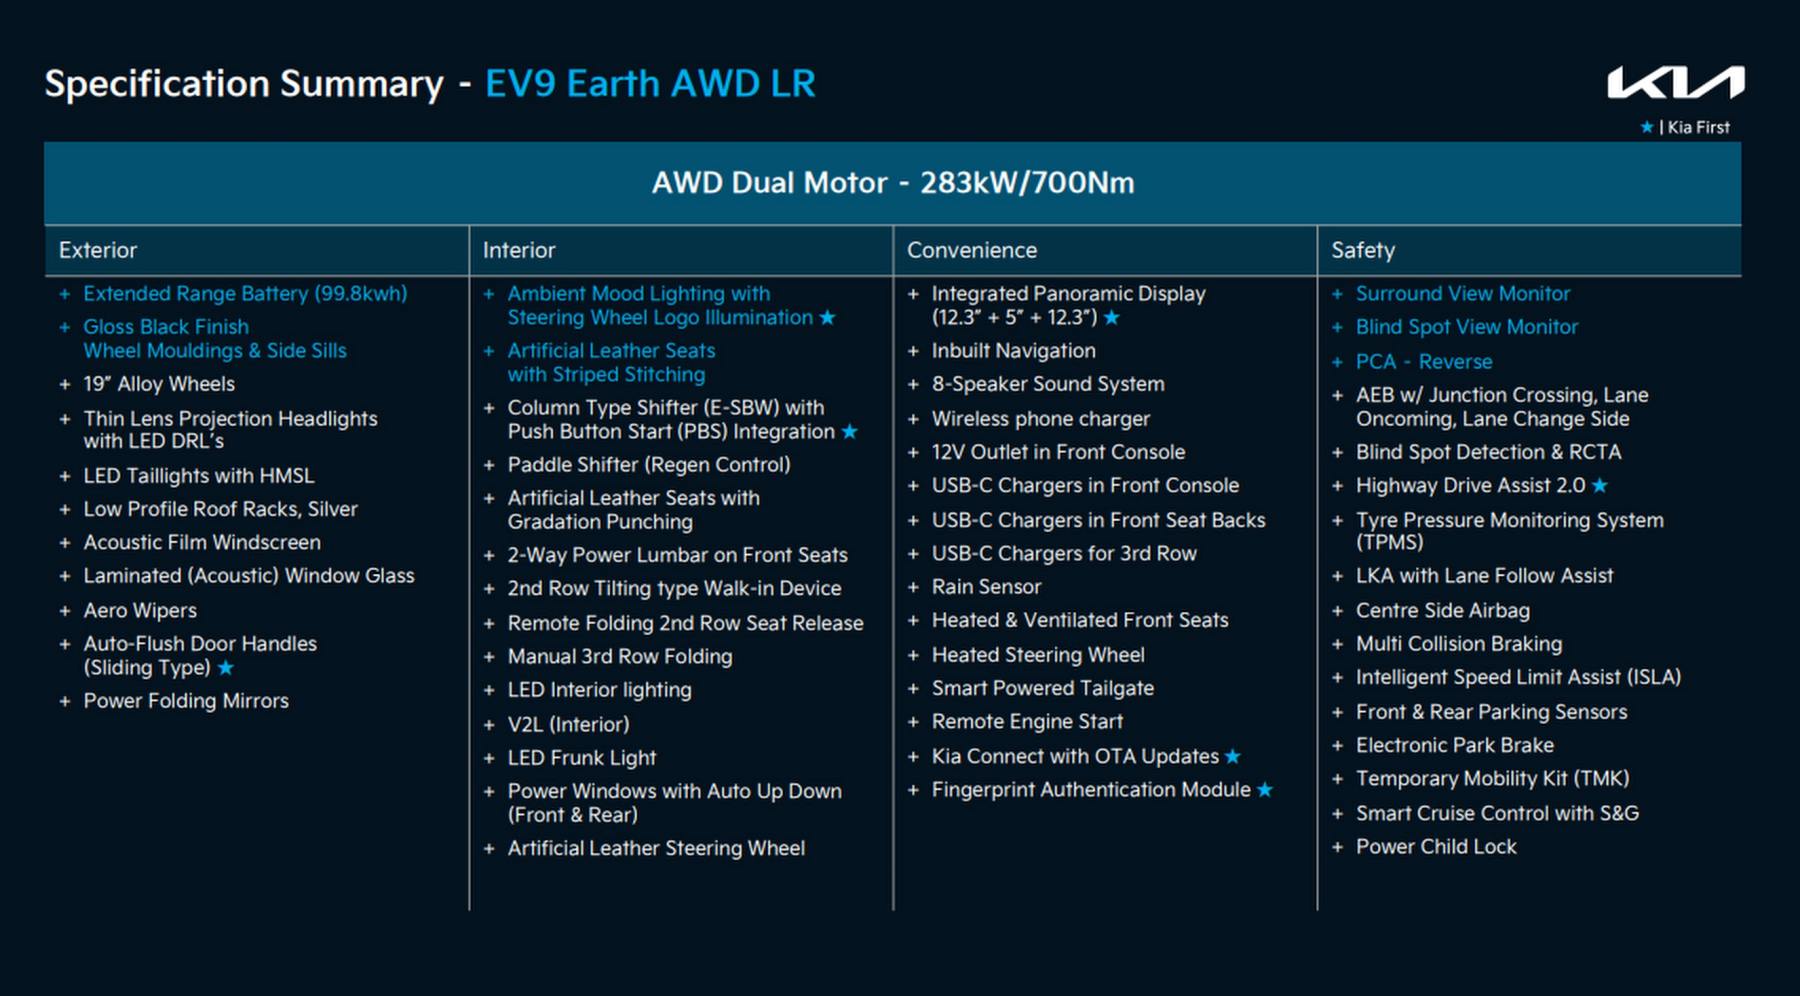 Kia EV9 Earth specifications